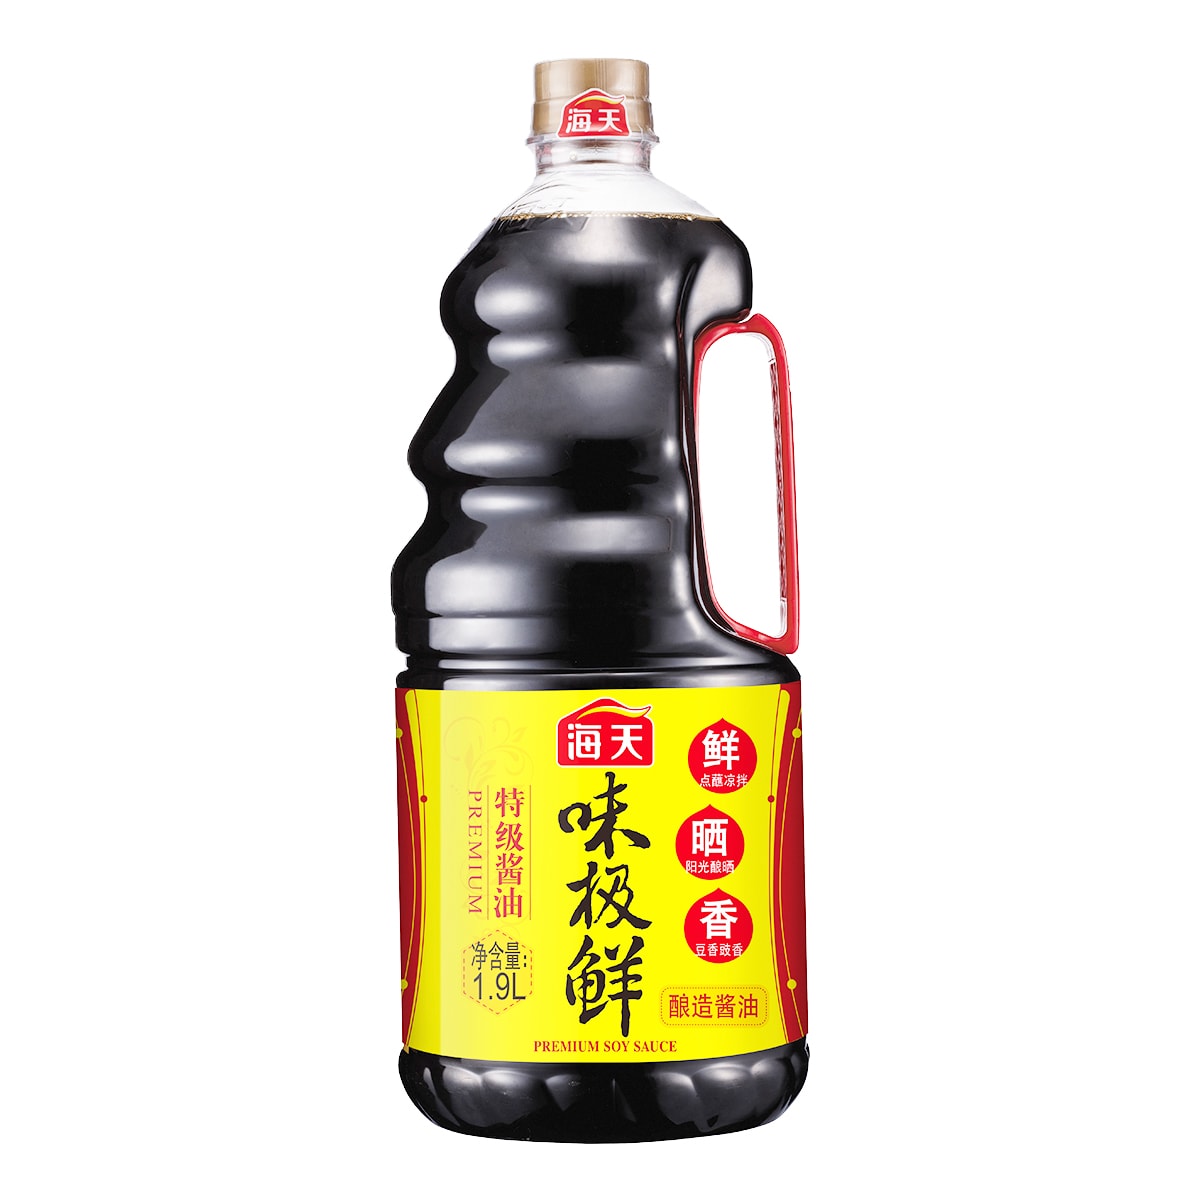 海天味极鲜 Premium soy sauce 1.9L